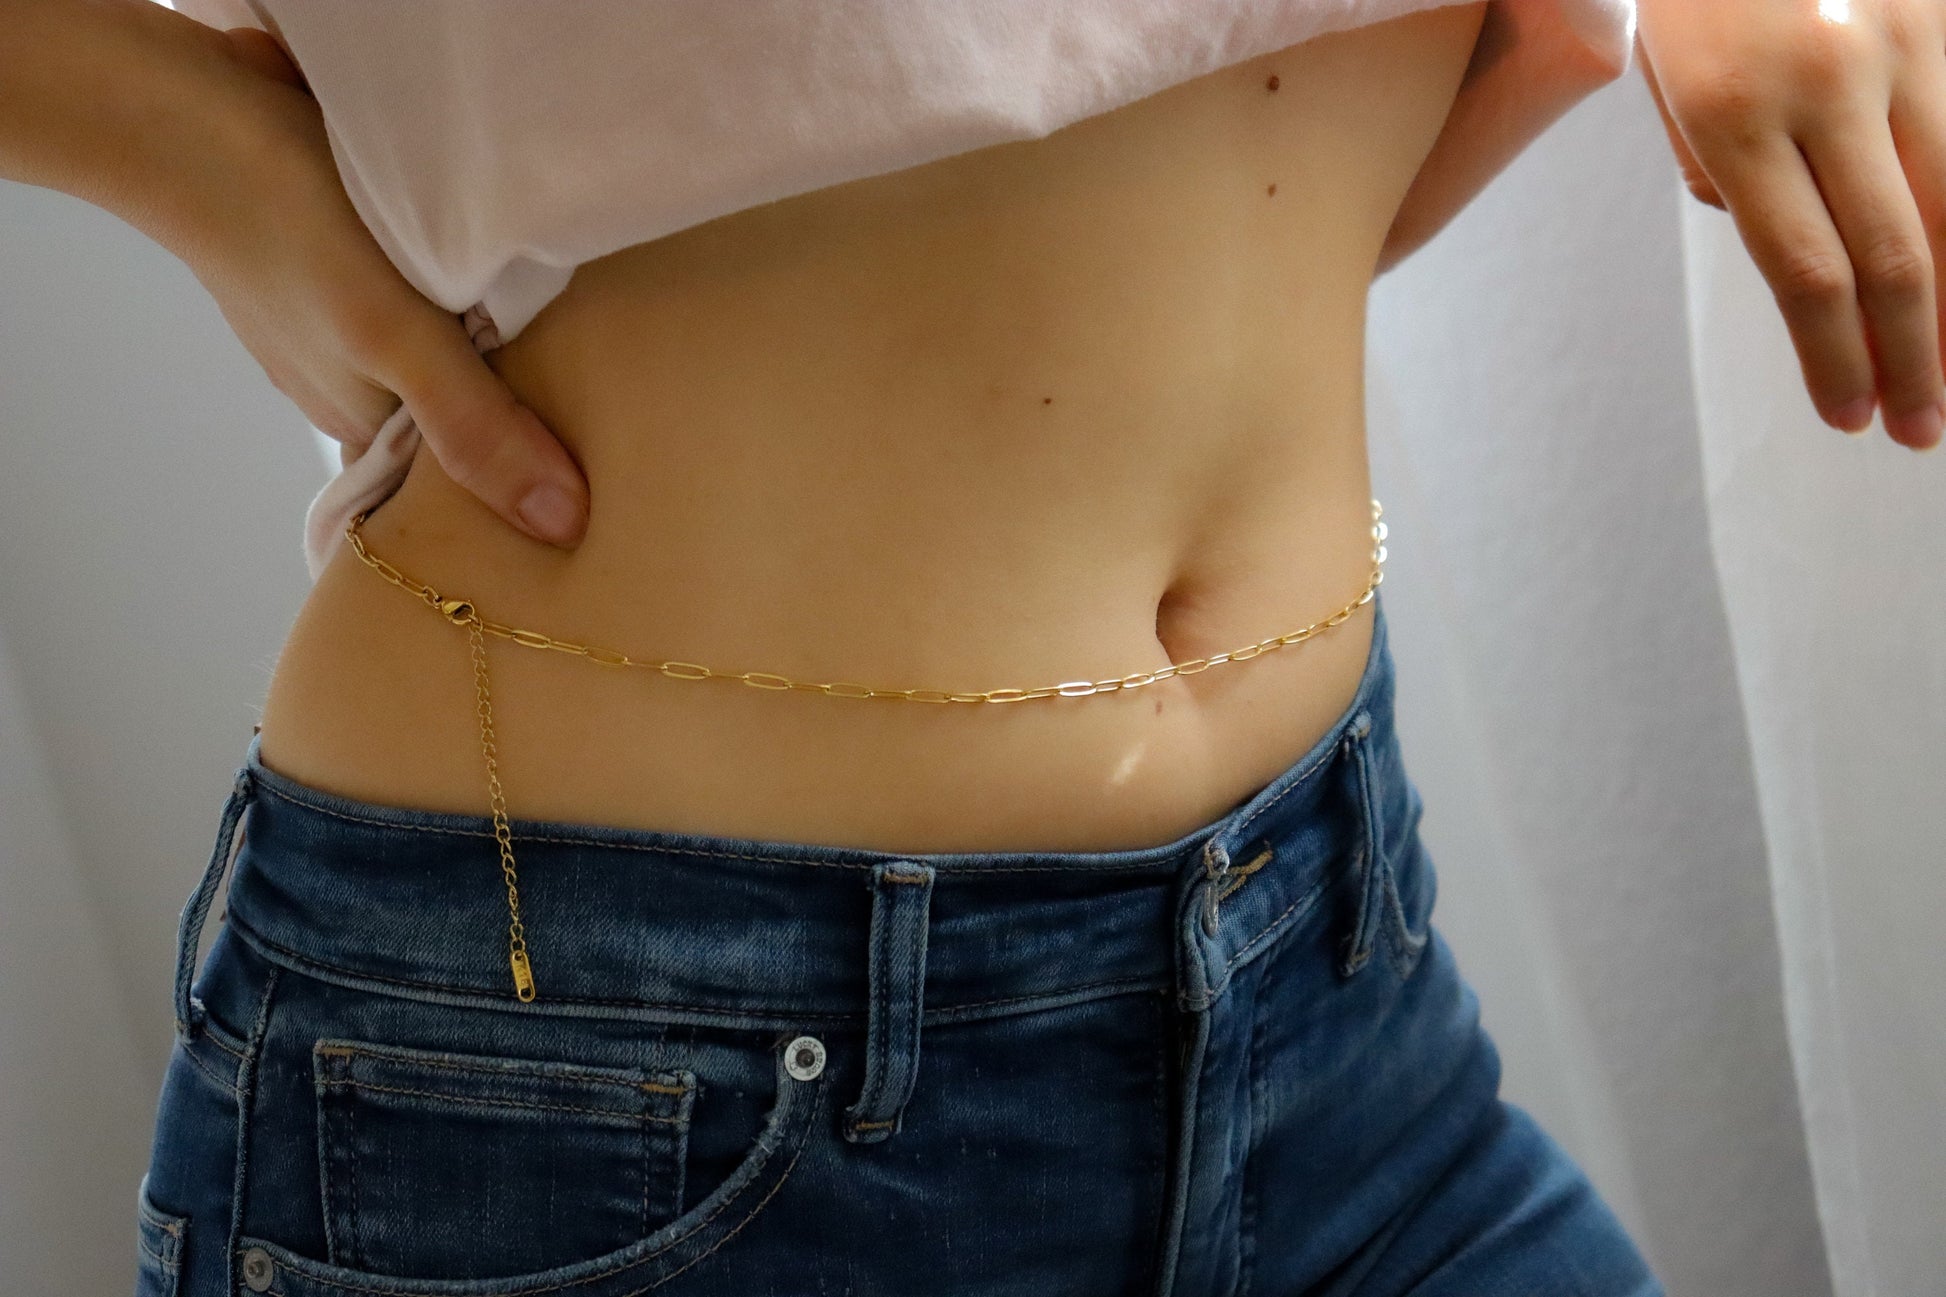 18K Gold Waist Chain, Belly Chain Bikini Body Jewelry Freshwater